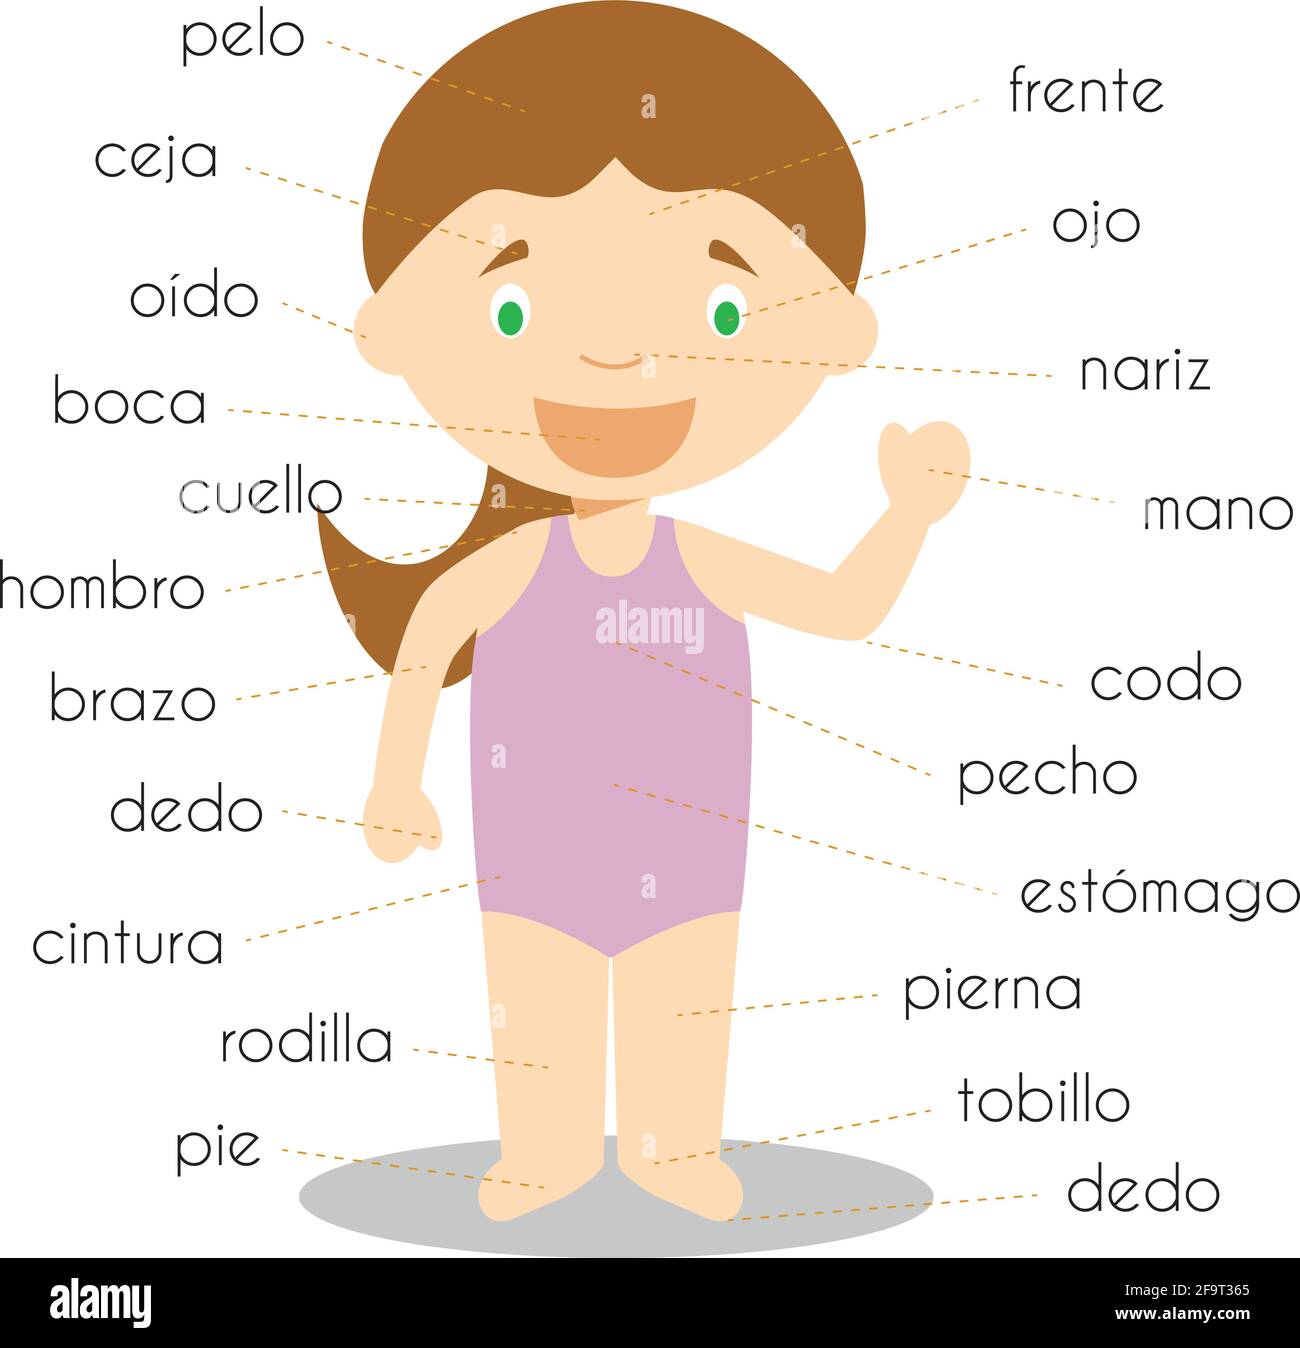 Human body parts vocabulary in spanish Vector Illustration Stock Vector